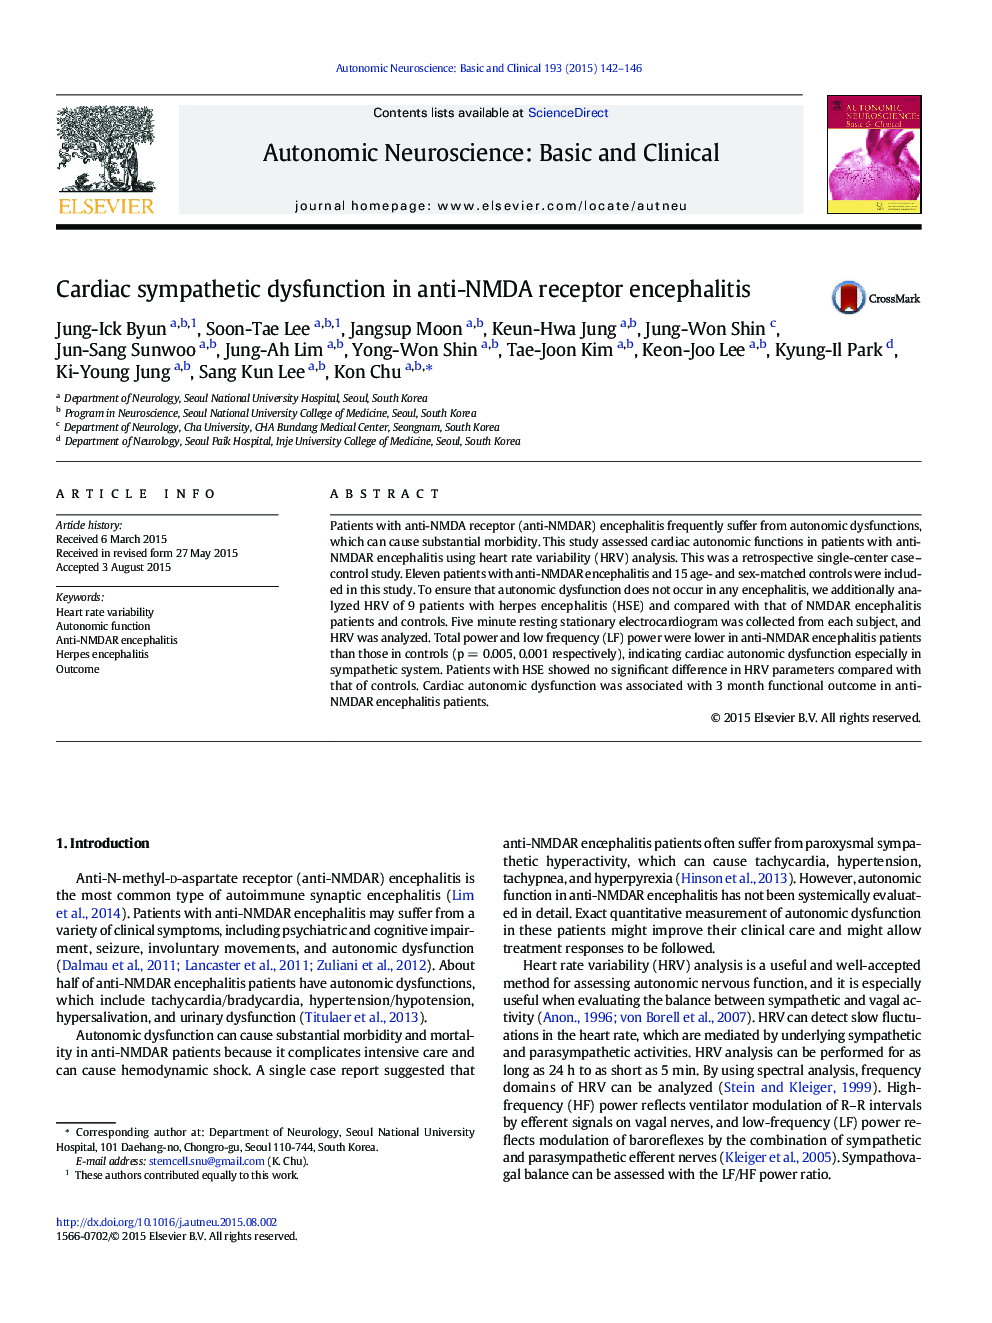 Cardiac sympathetic dysfunction in anti-NMDA receptor encephalitis